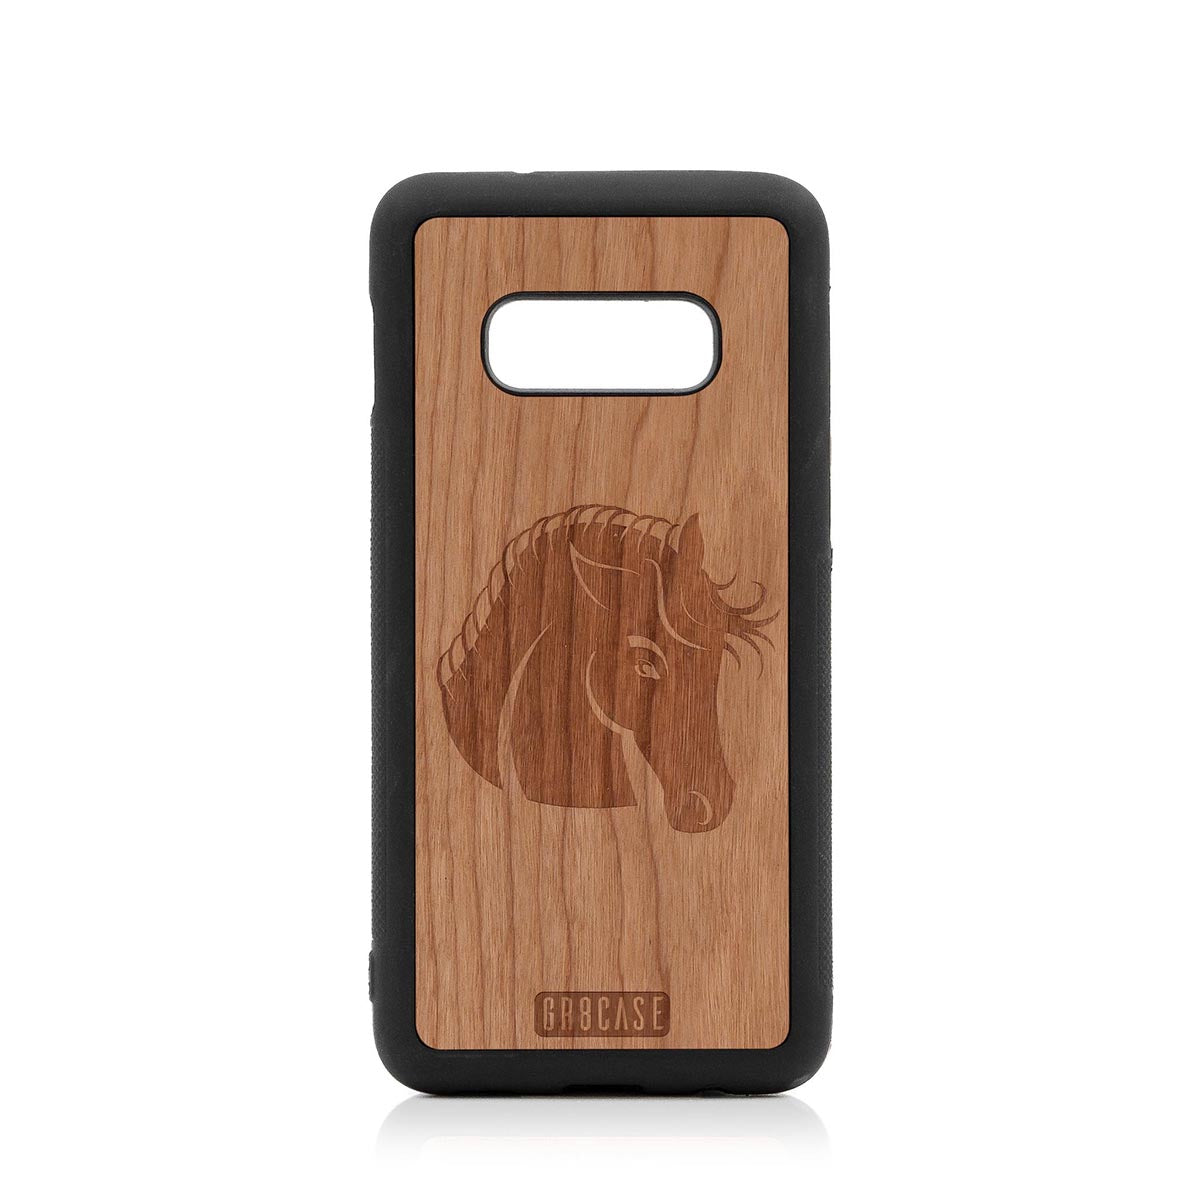 Horse Design Wood Case Samsung Galaxy S10E by GR8CASE